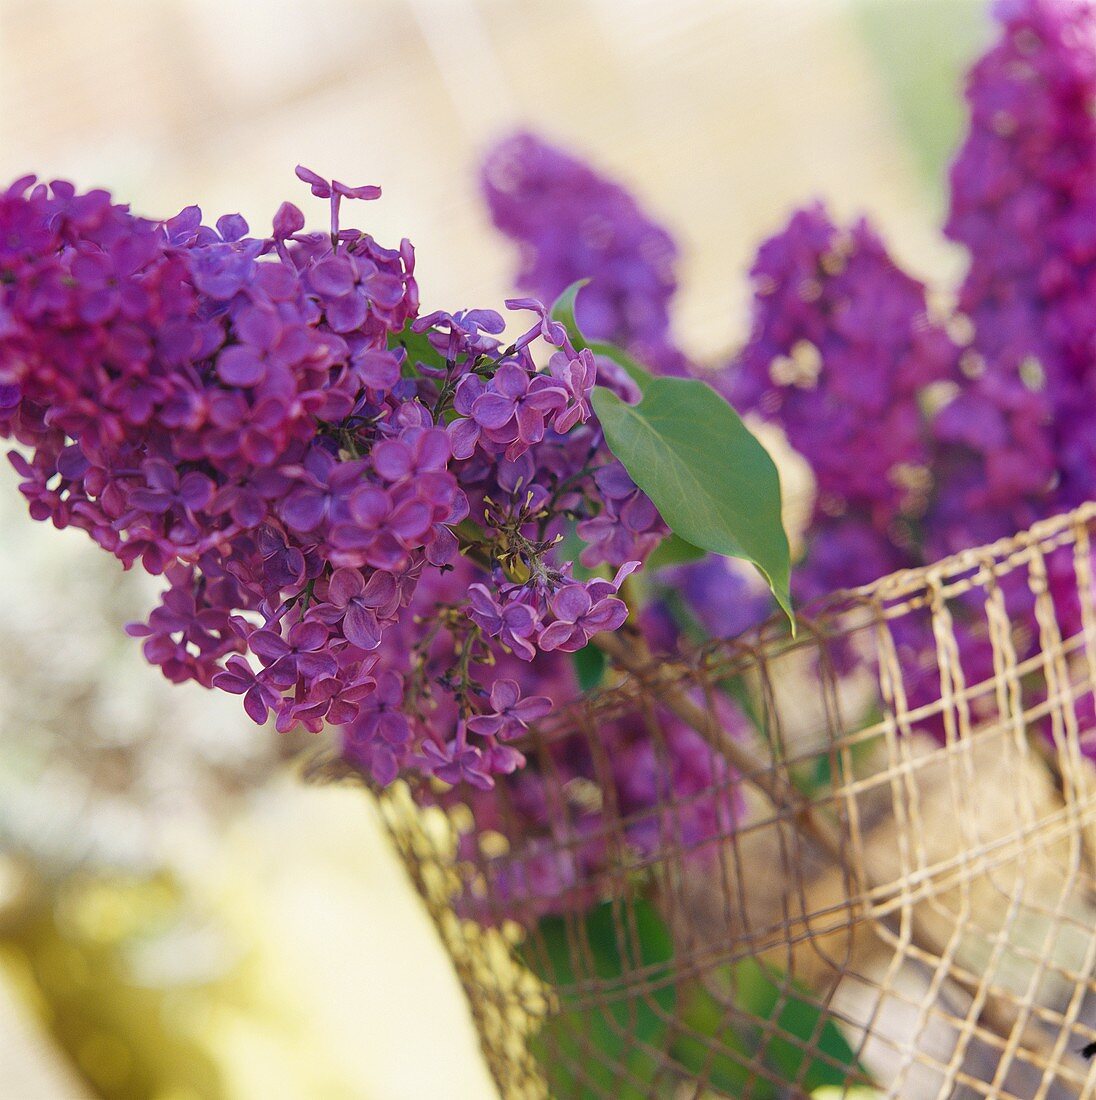 Purple lavender in a wire basket